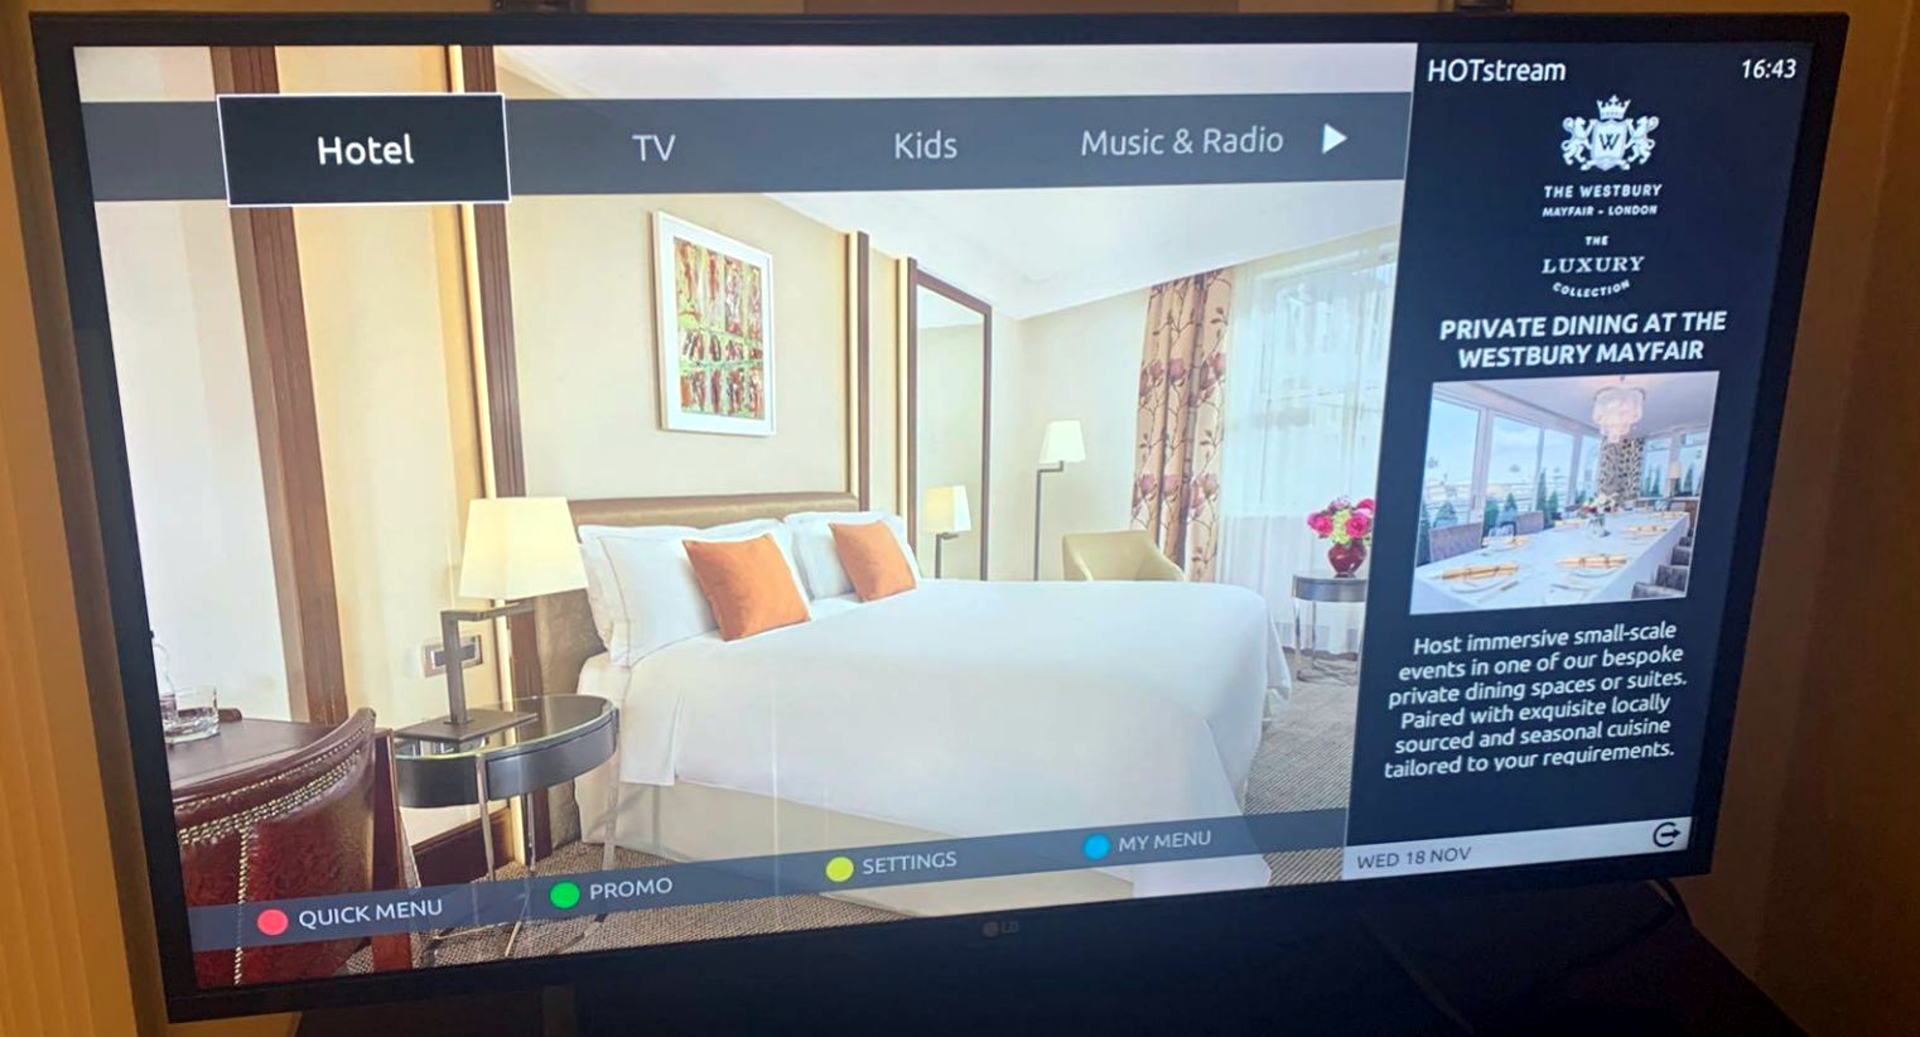 LG 49L X 761H 49" 1080p Full HD Smart Hotel LED Backlit LCD Flat Panel Display TV wall mounted Width